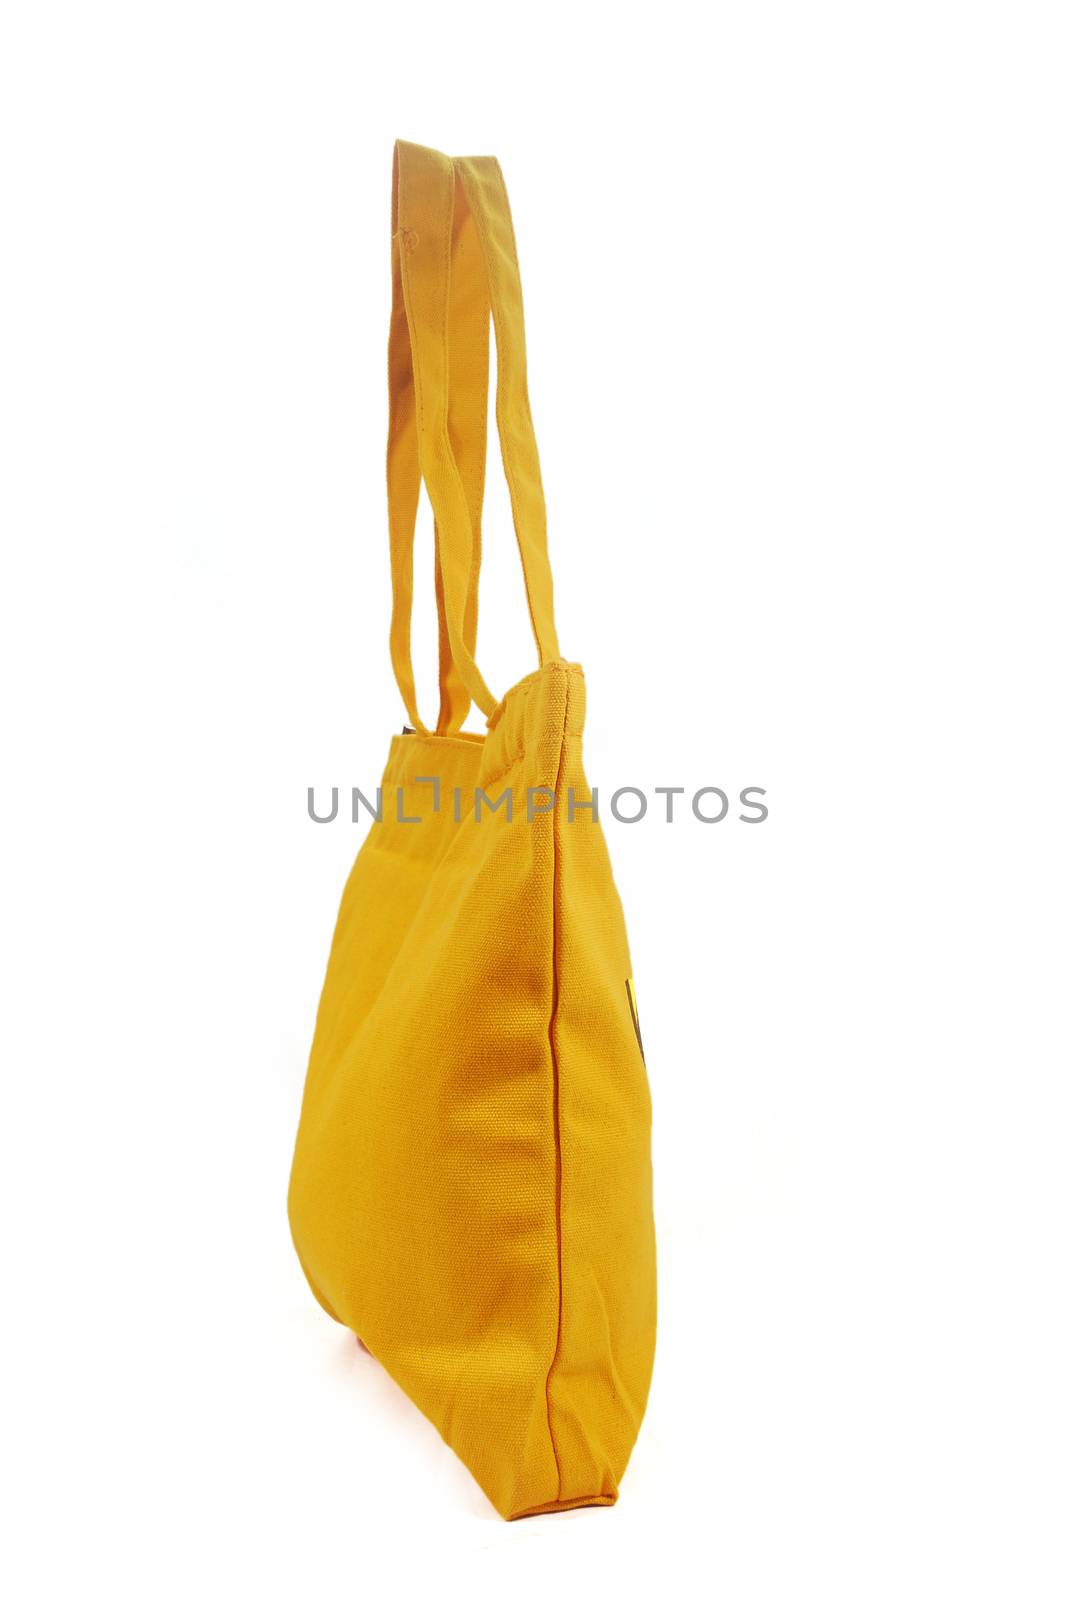 Yellow cloth bag. by thitimontoyai